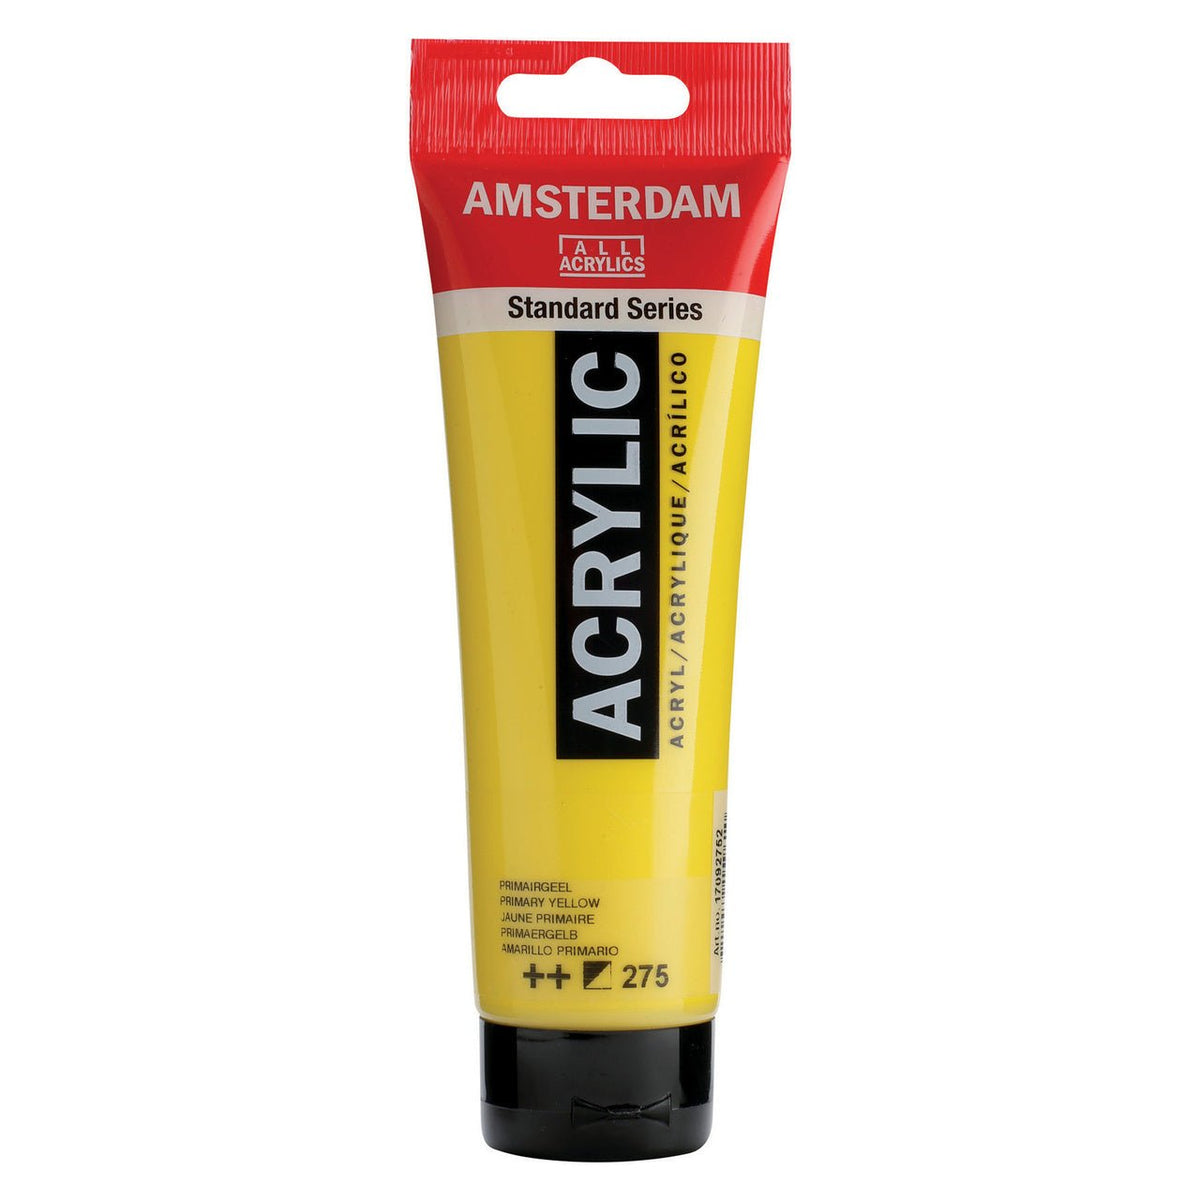 Amsterdam Standard Acrylic Paint 120ml Primary Yellow - merriartist.com